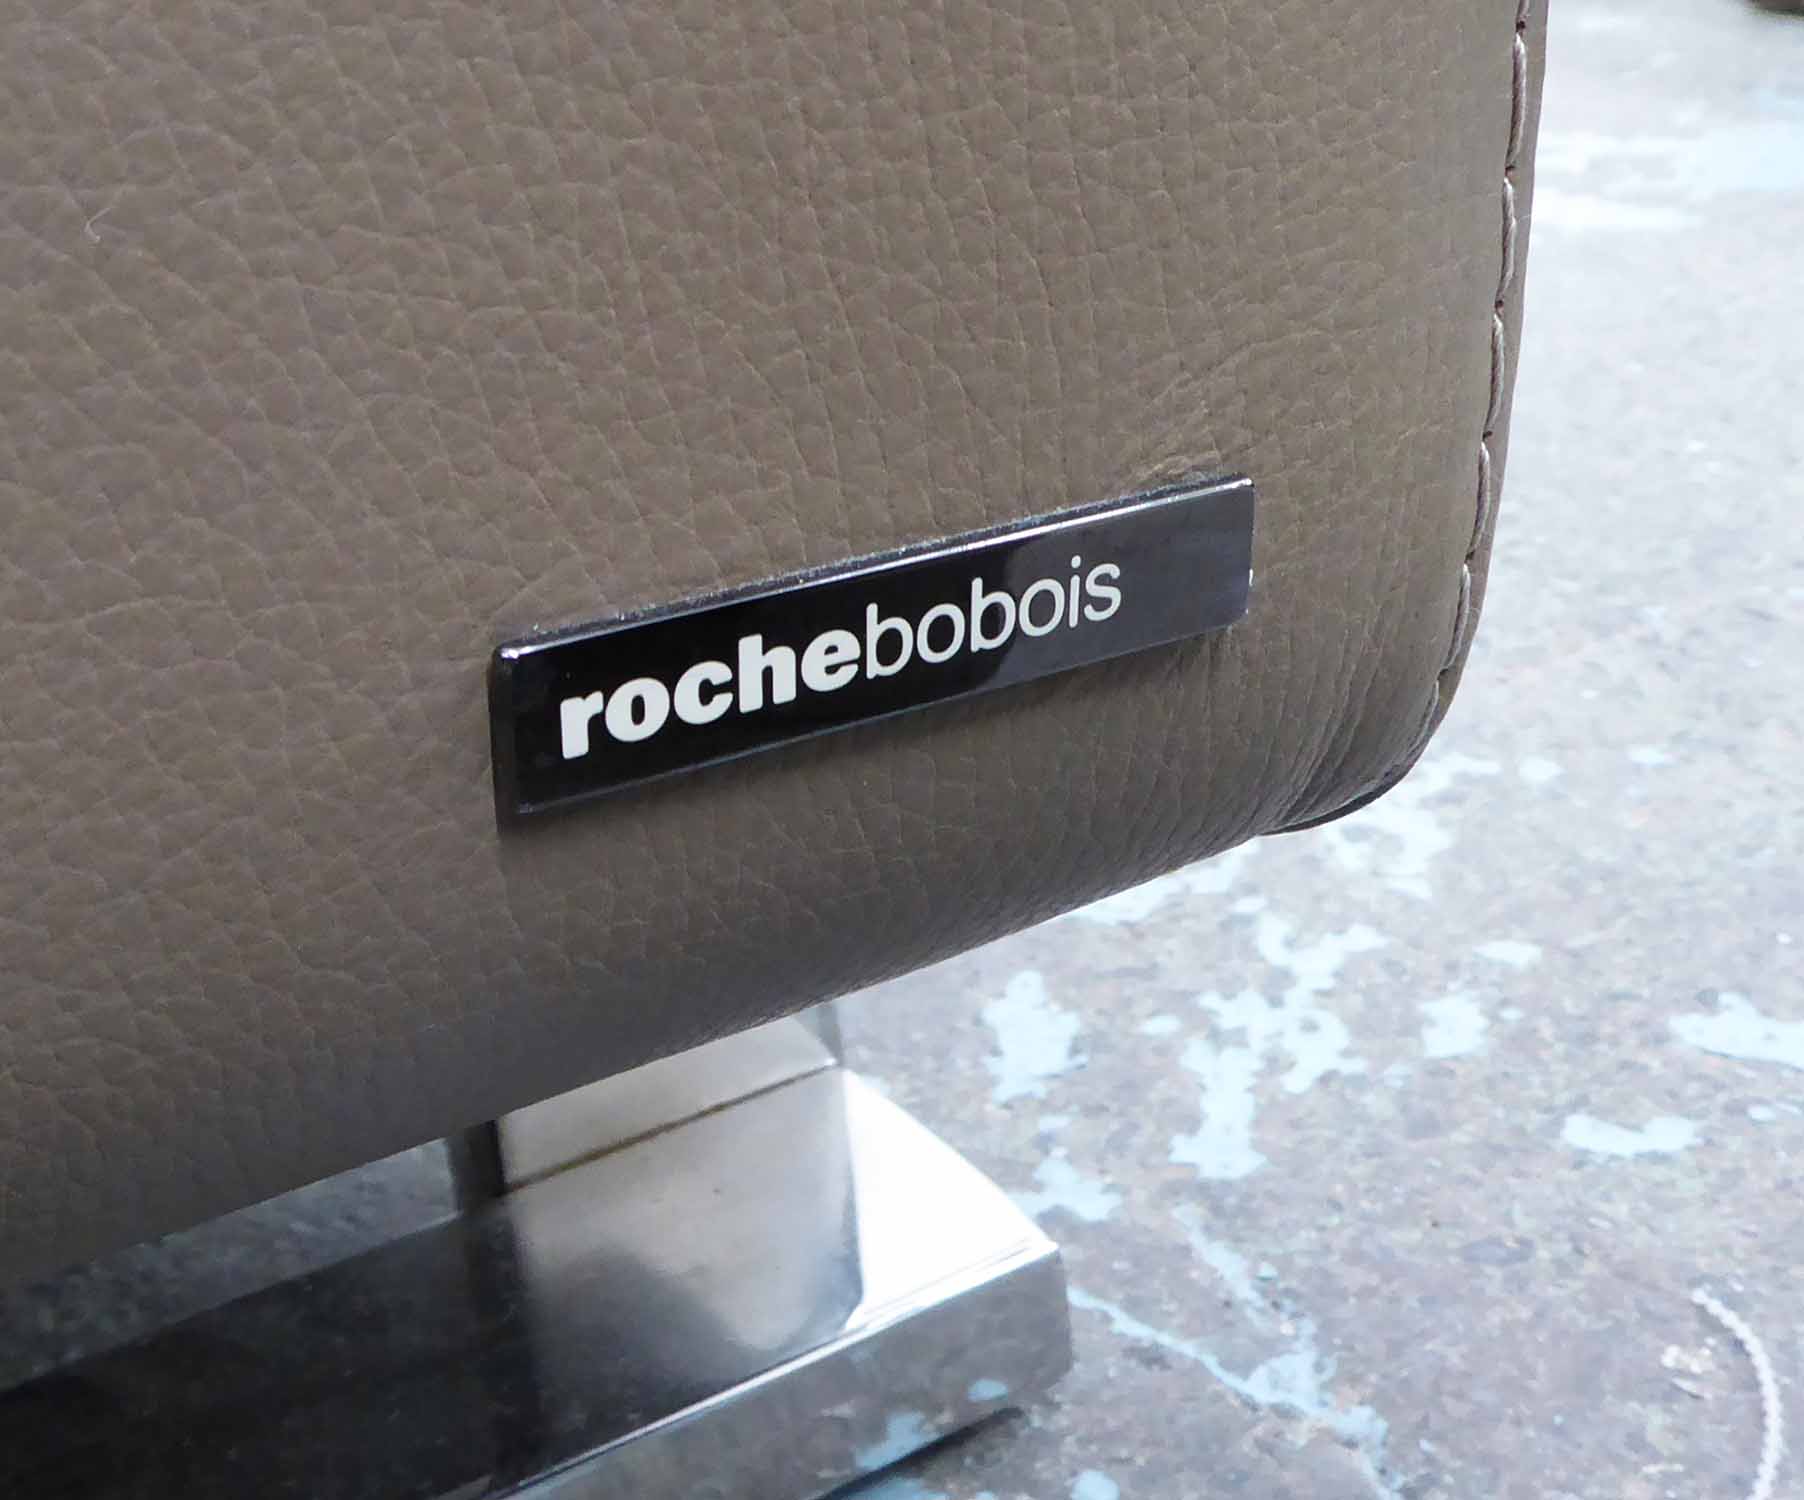 ROCHE BOBOIS CORNER SOFA, caramel leather finish, 270cm x 260cm x 90cm approx. - Image 4 of 4